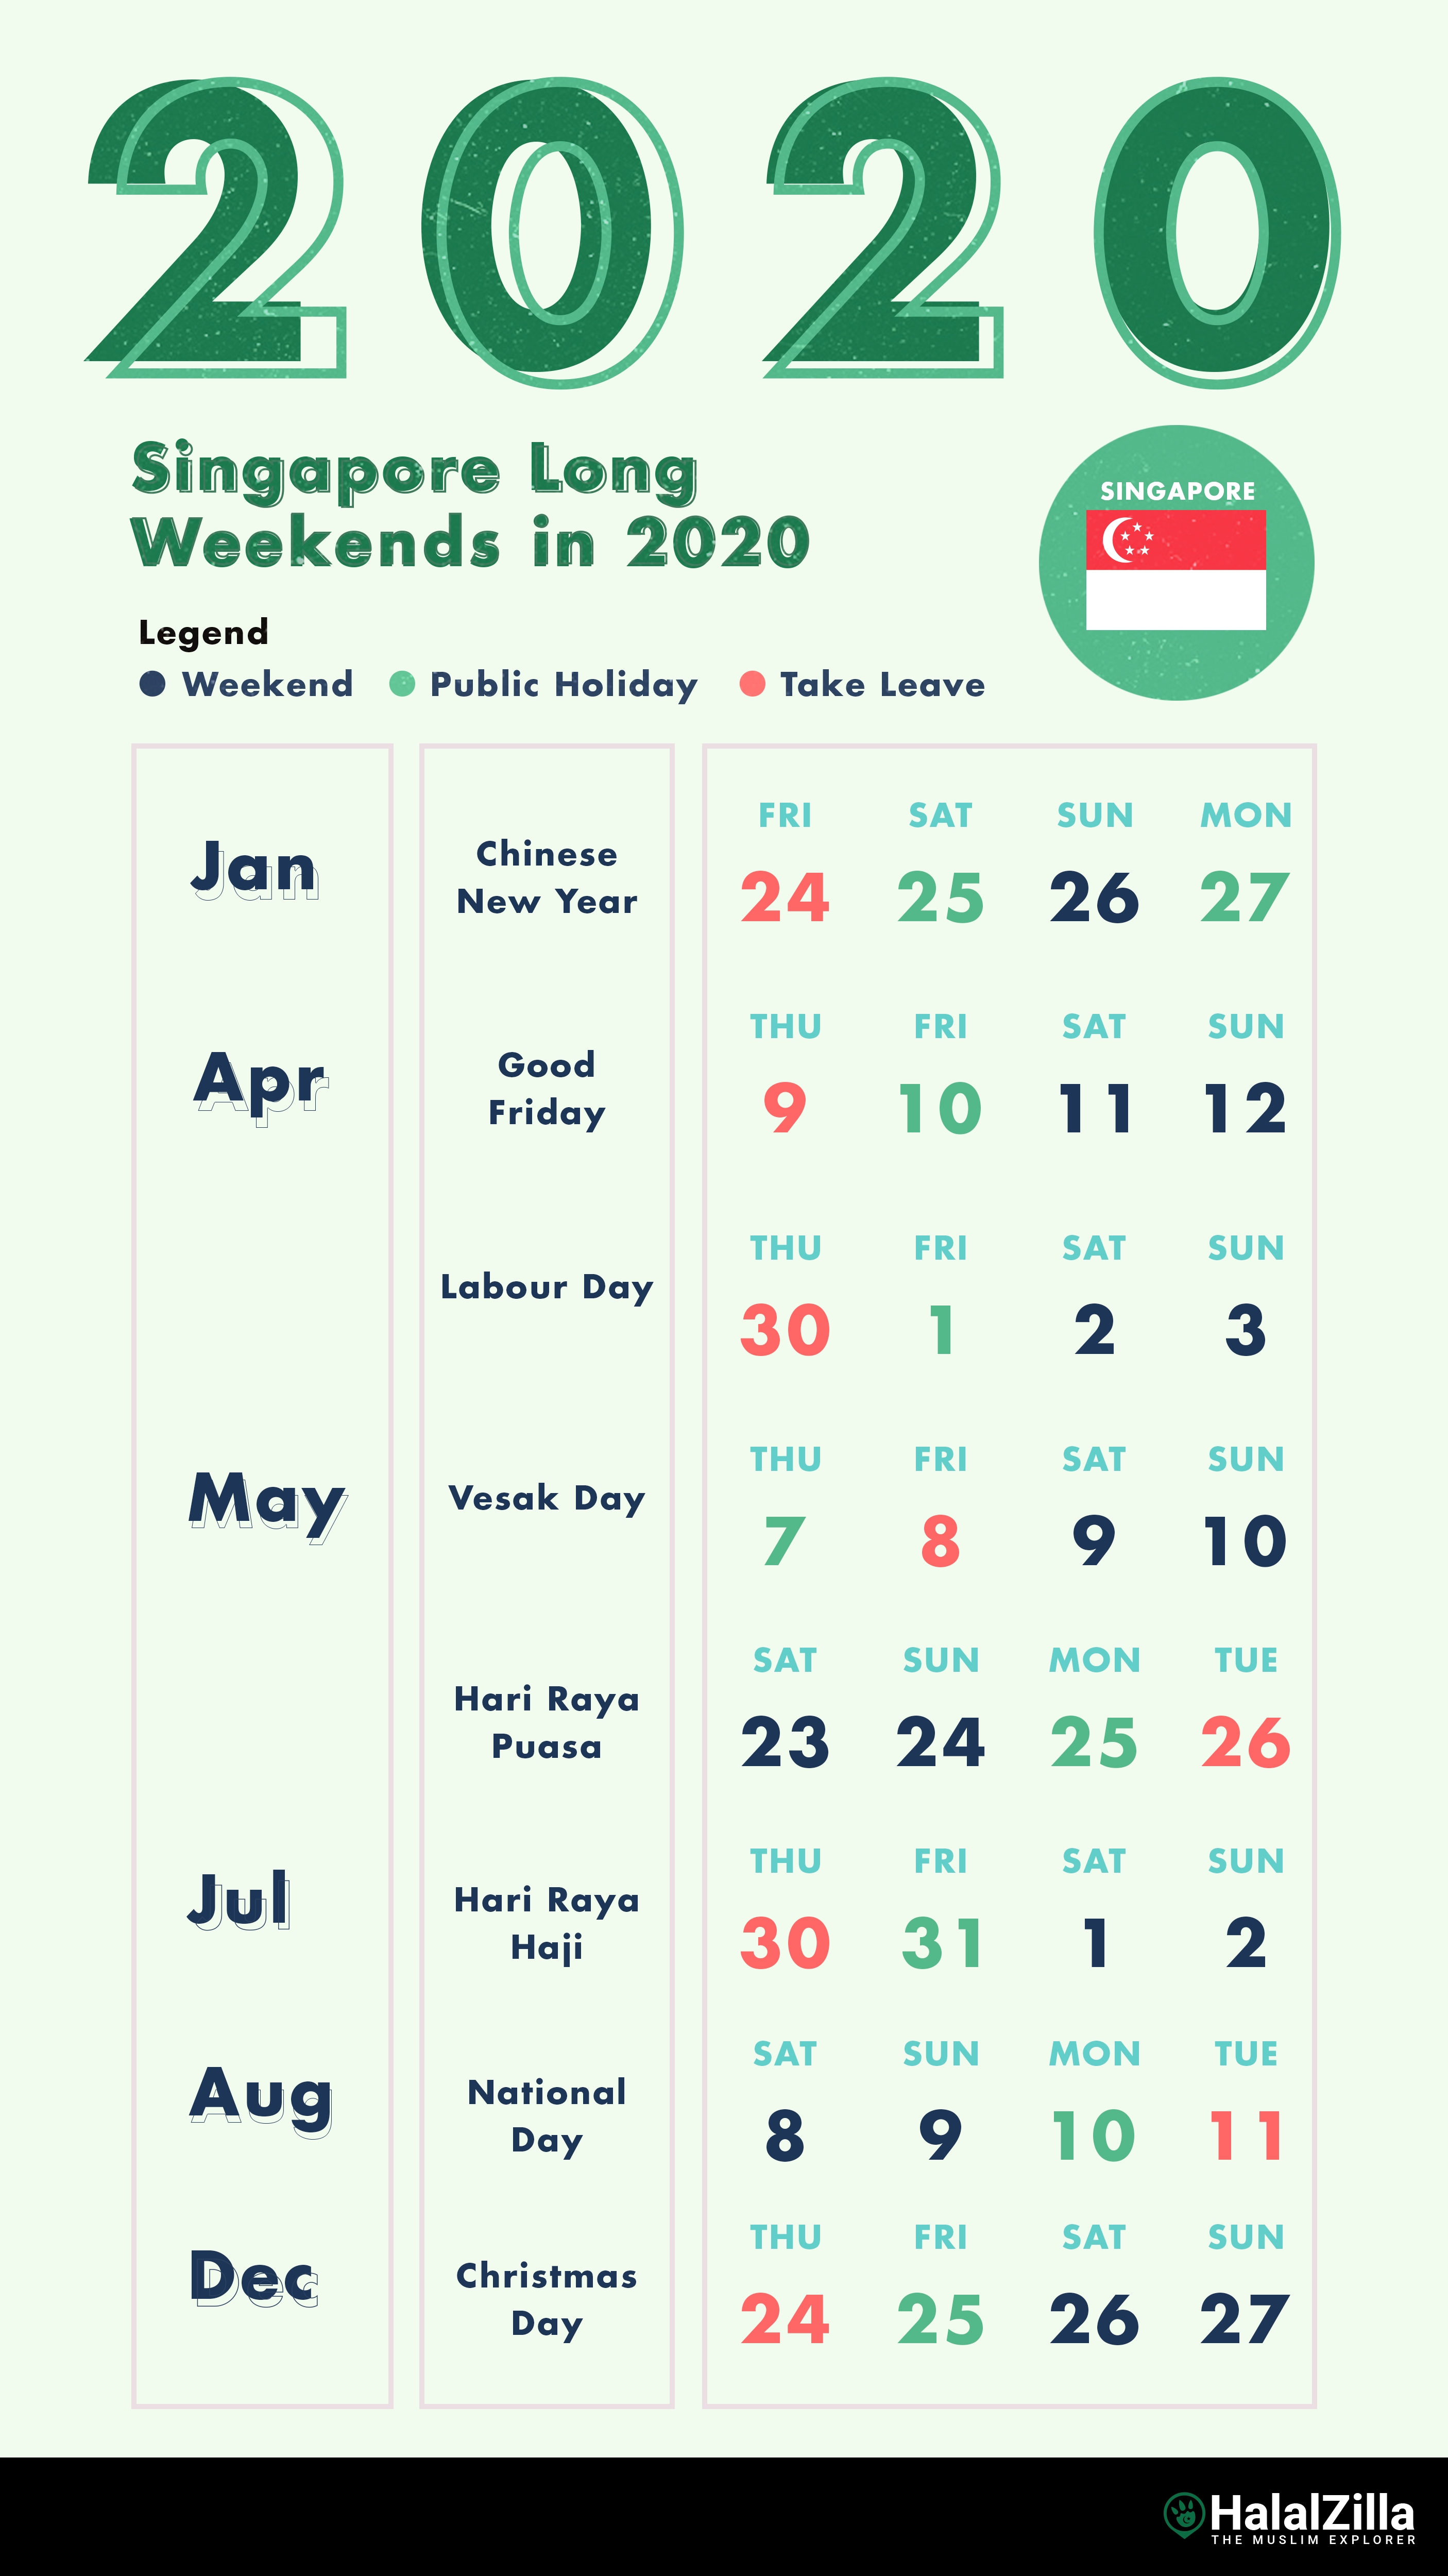 8 Long Weekends In Singapore In 2020 - Halalzilla-National Food Holidays Calendar 2020